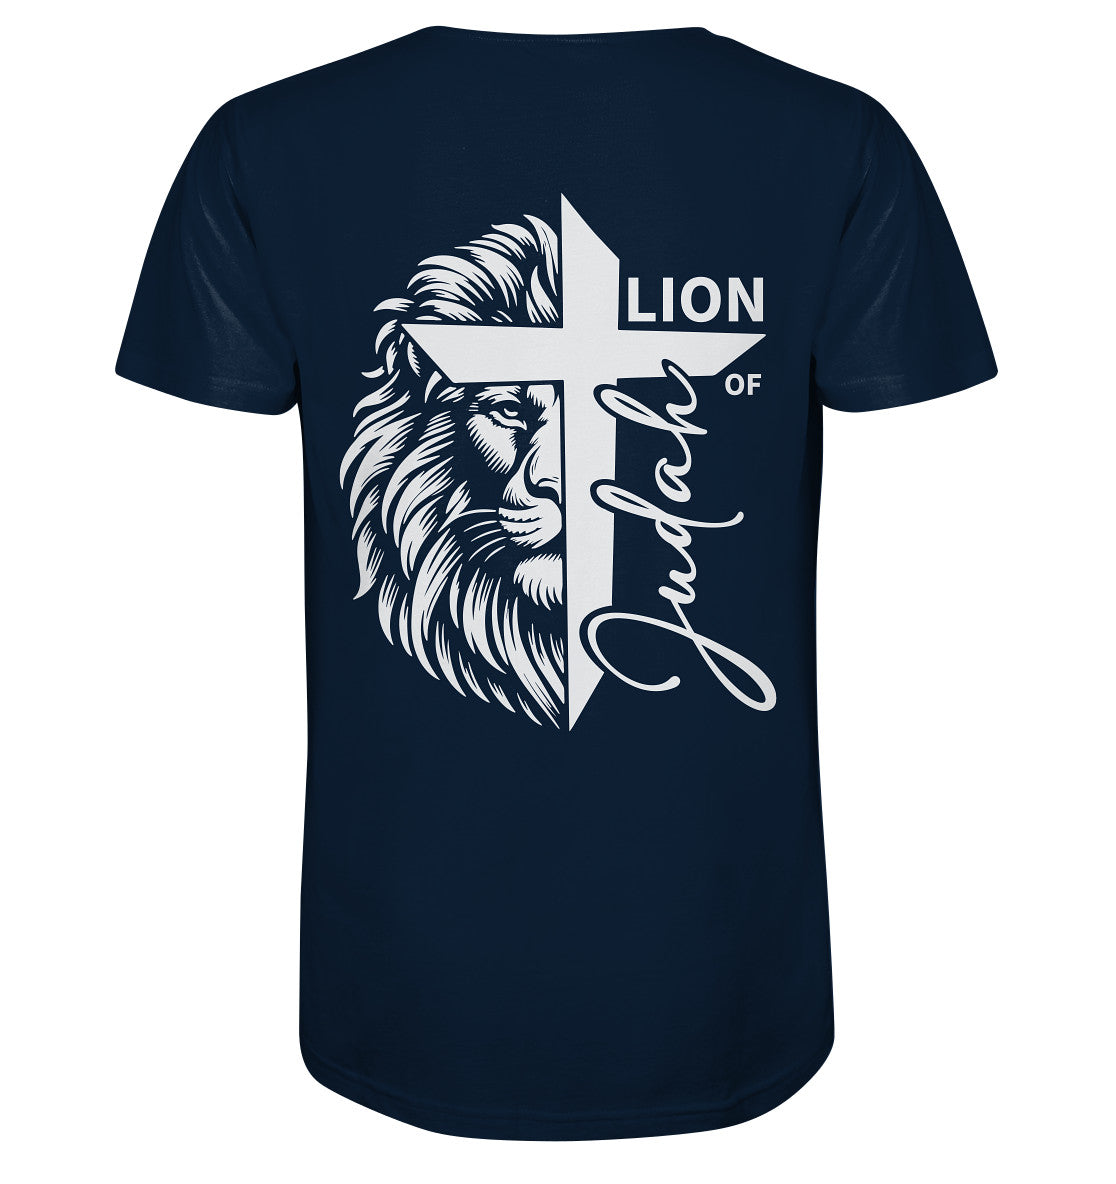 Offb 5,5 - Lion of Judah - Cross - Organic Shirt